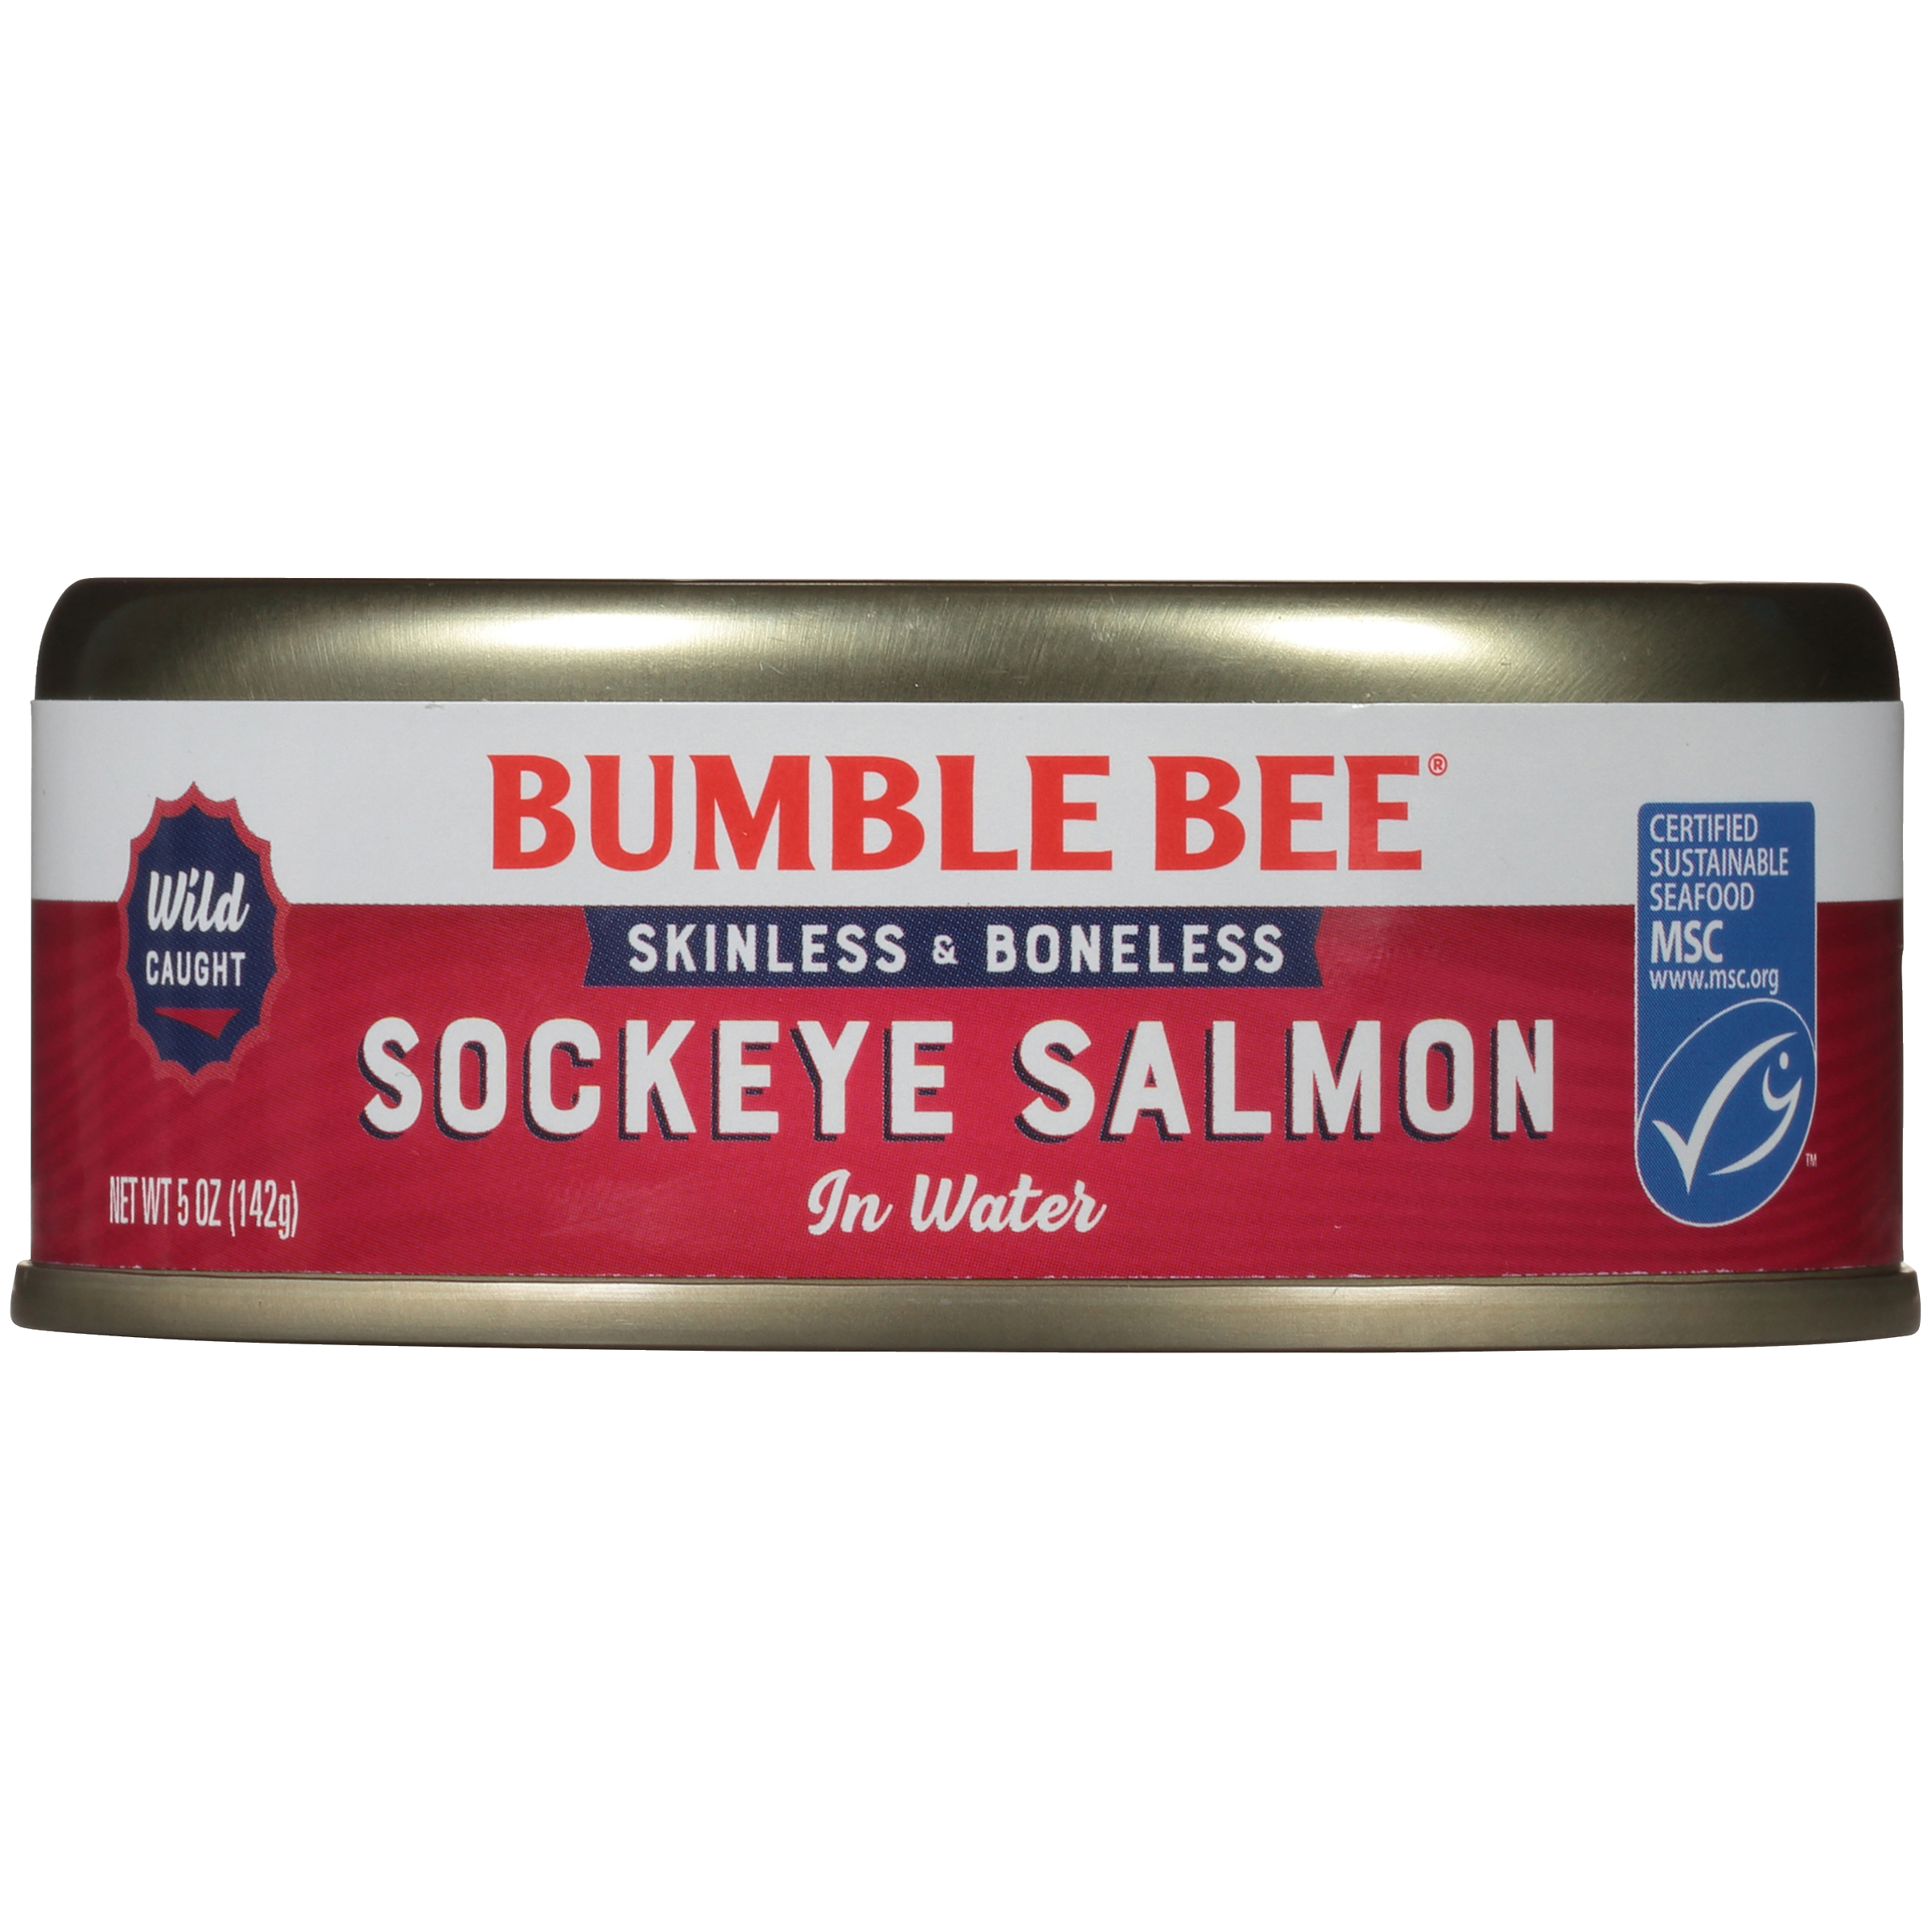 BUMBLE BEE RED SOCKEYE SALMON 5 OZ